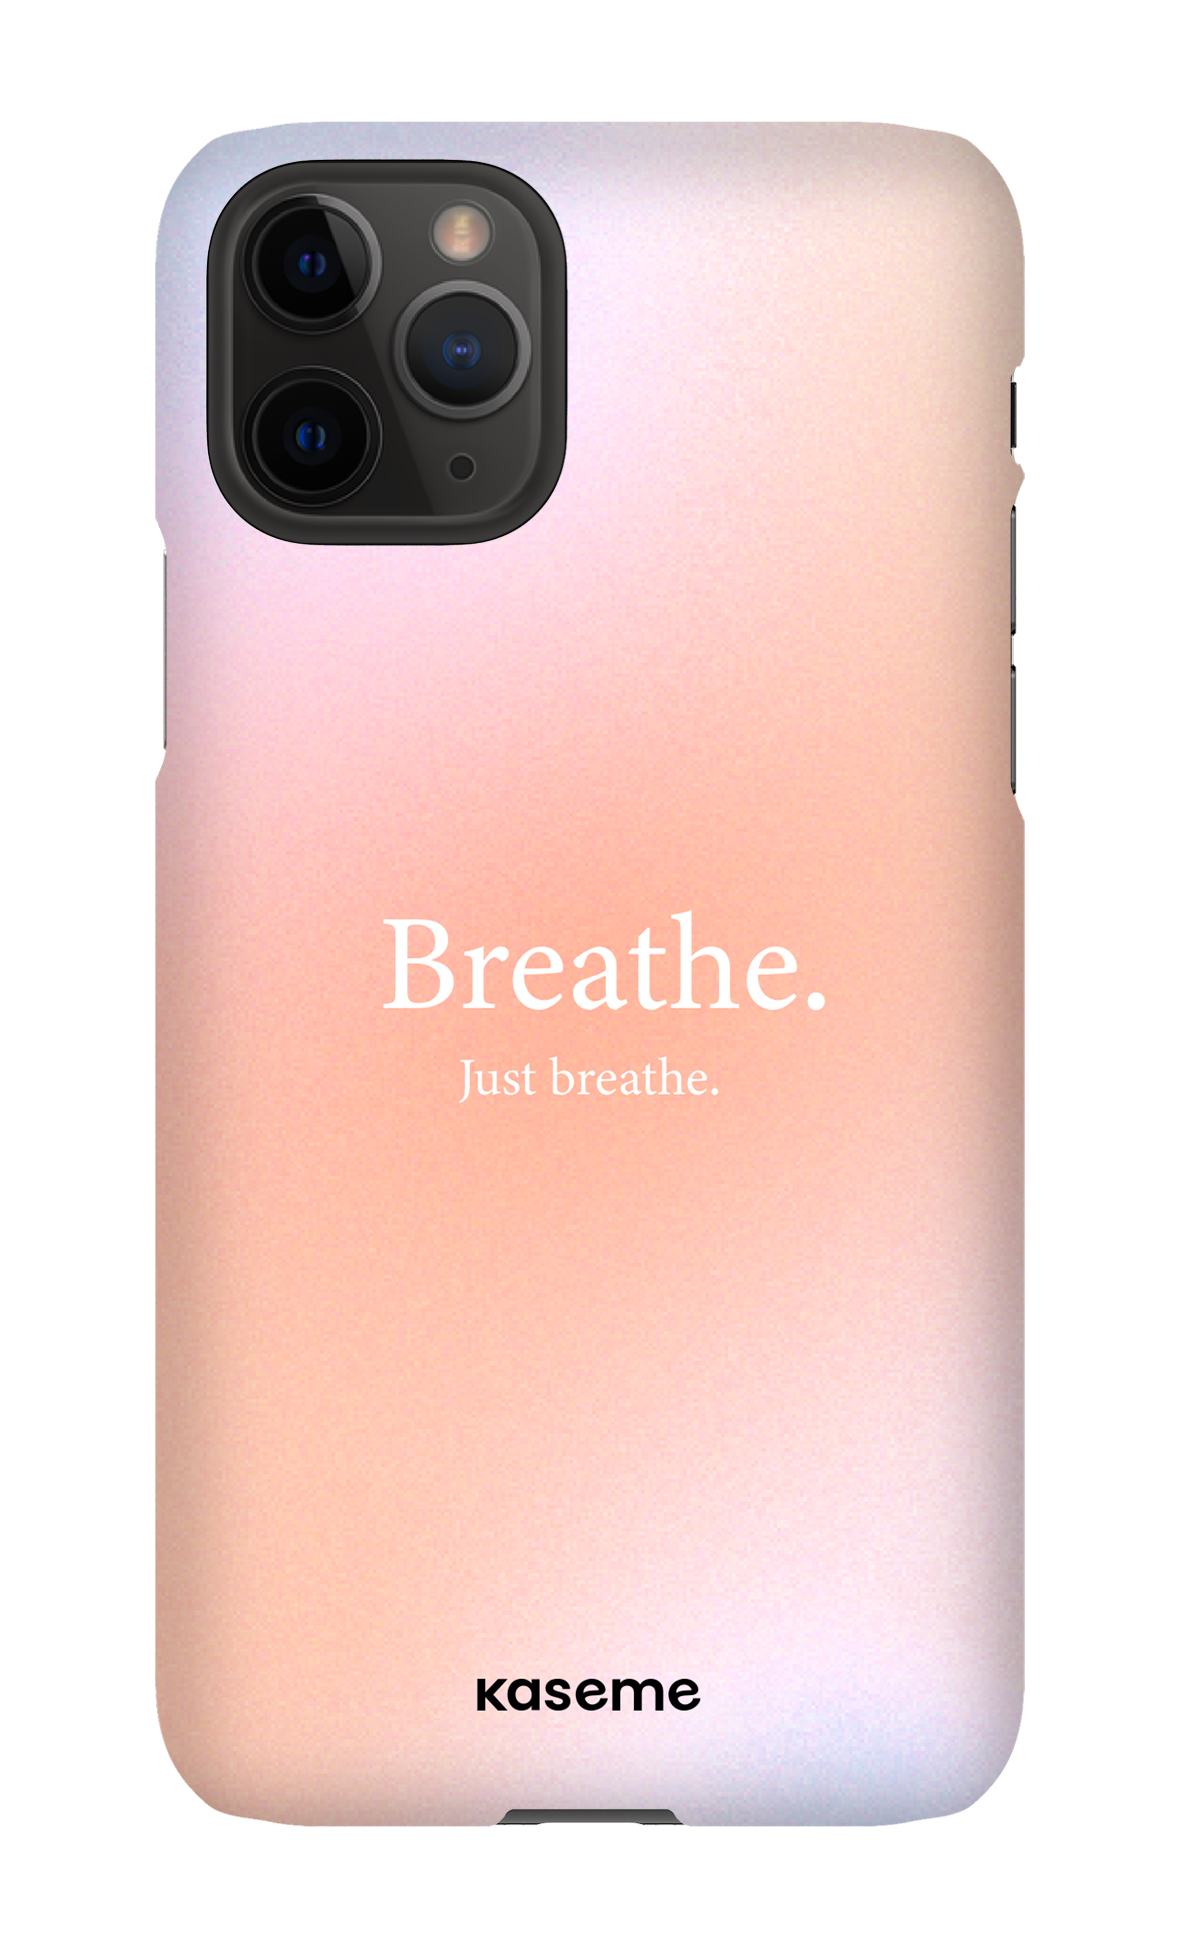 Just breathe - iPhone 11 Pro